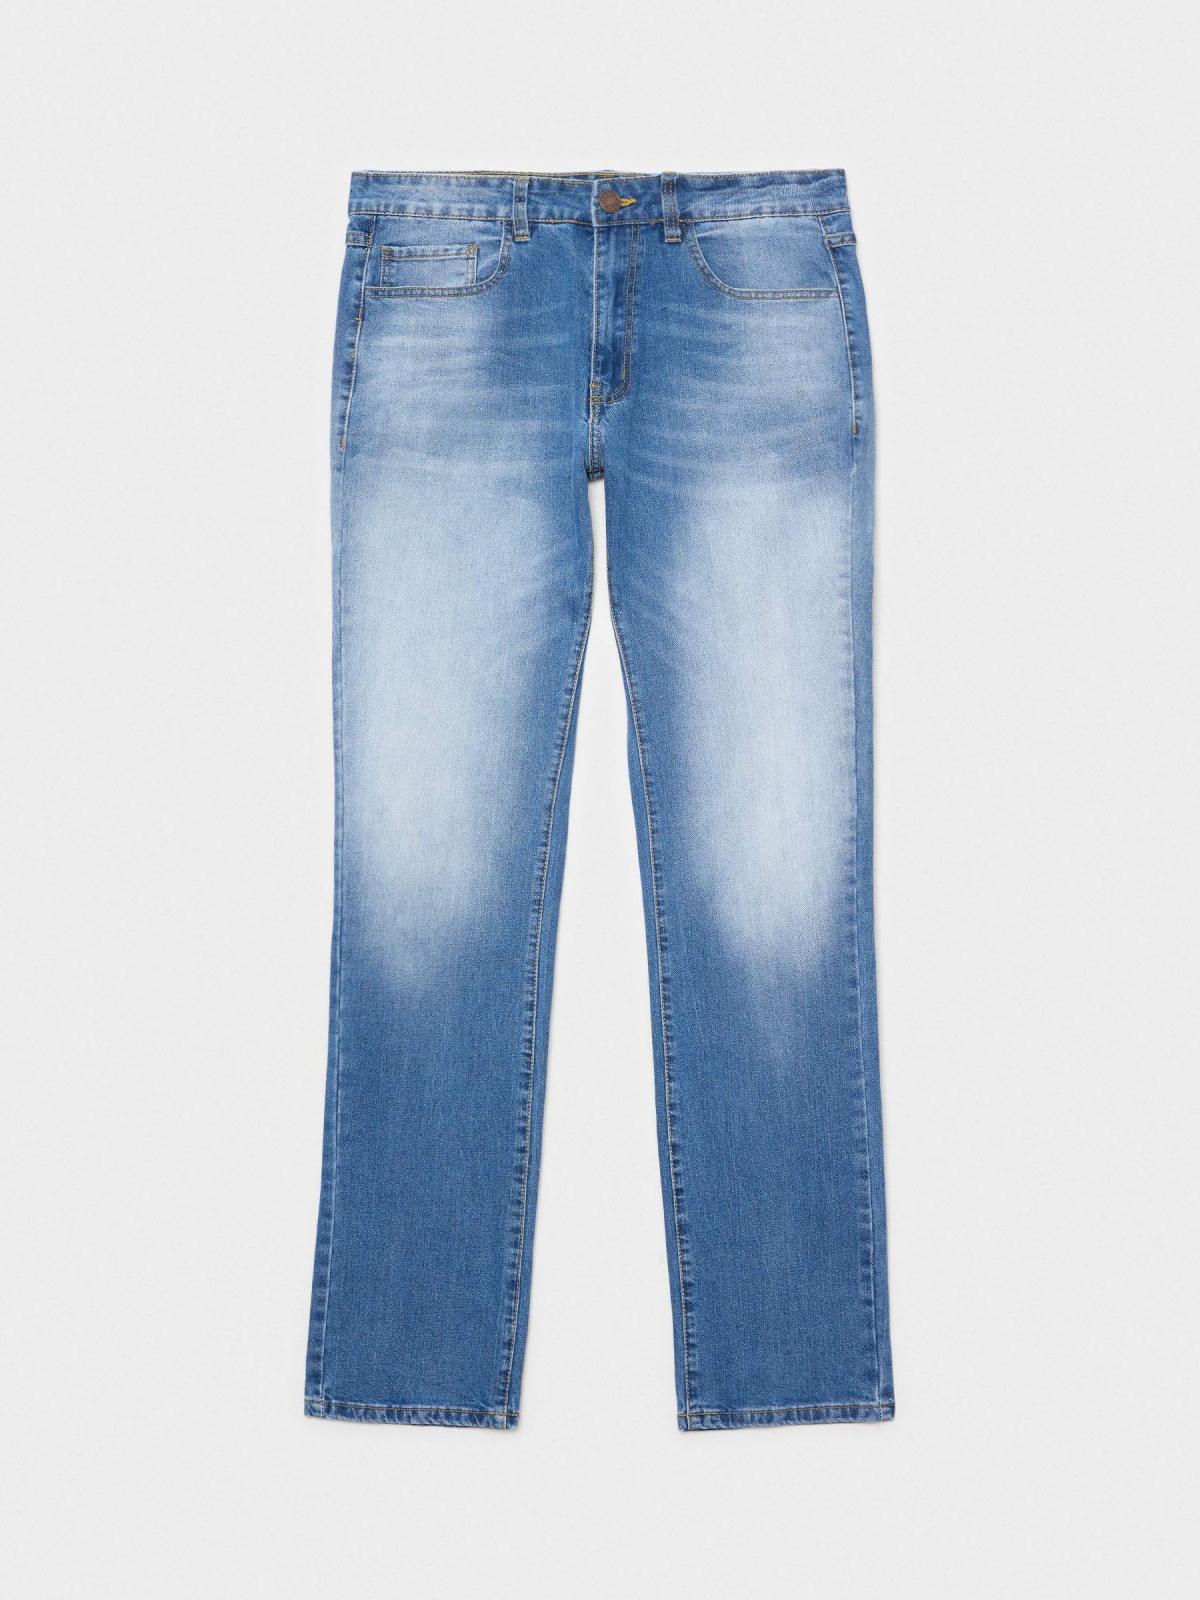  Regular jeans blue